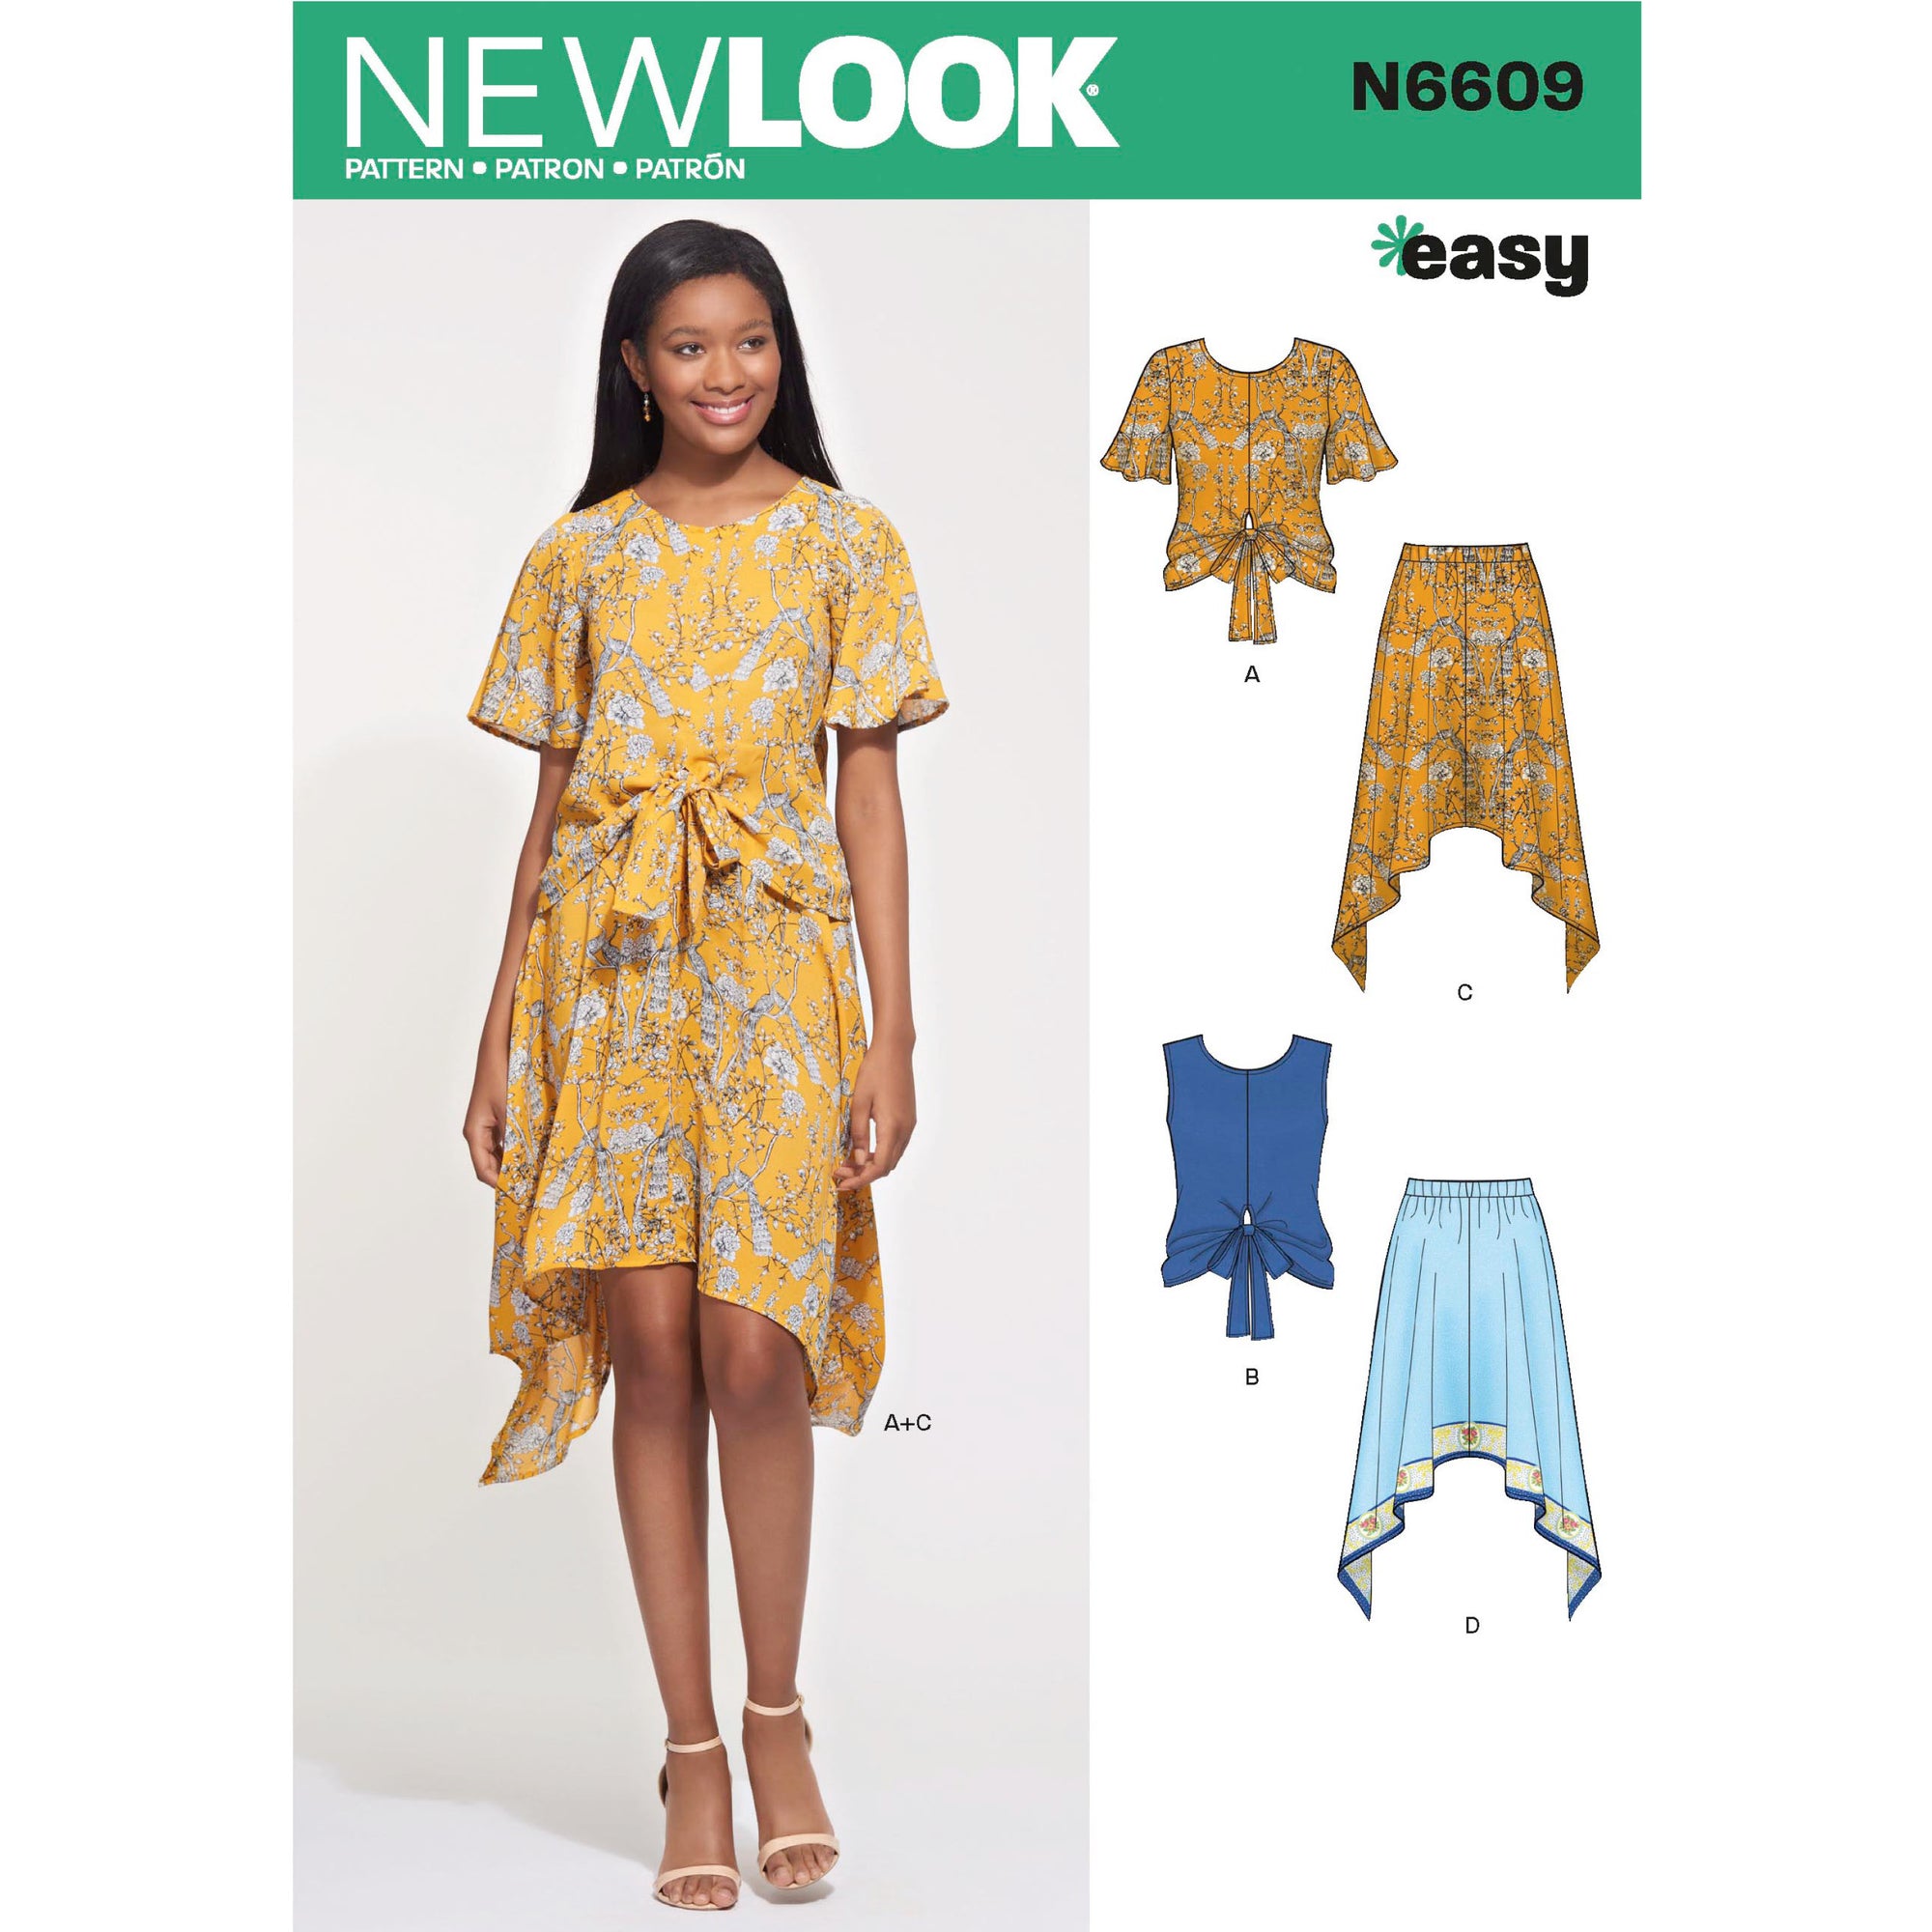 6609 New Look Sewing Pattern N6609 Misses' 2-Piece Dress